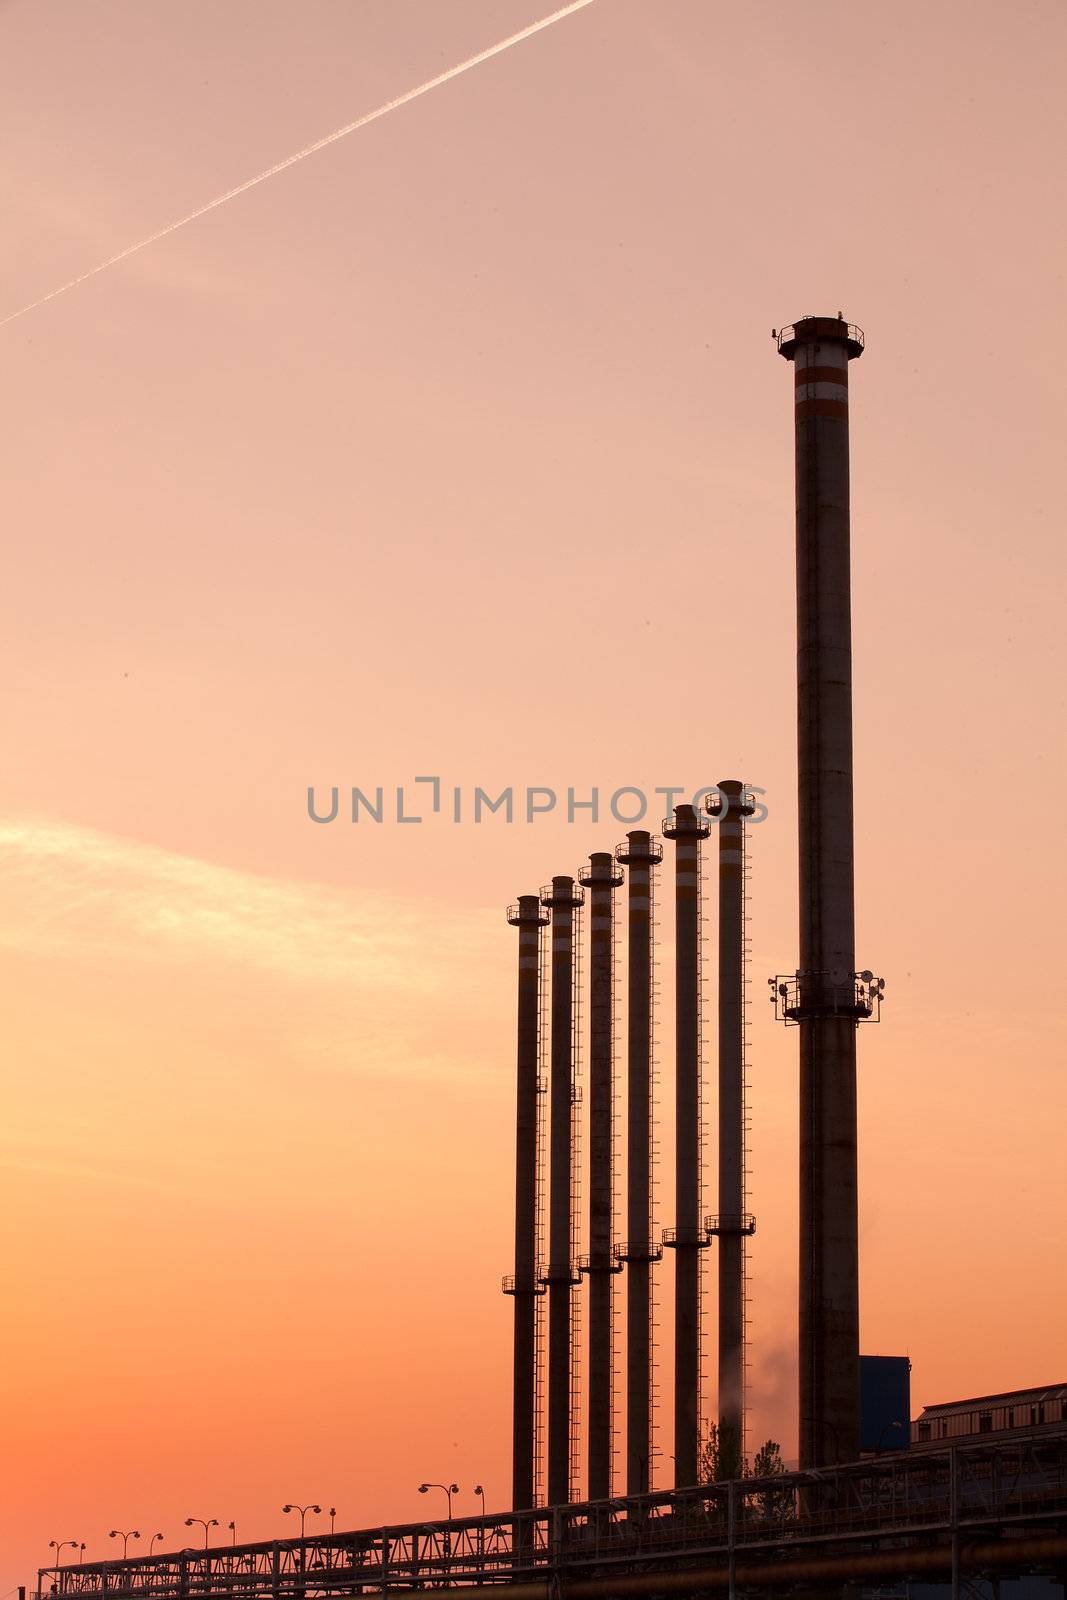 Factory chimneys at sunrise